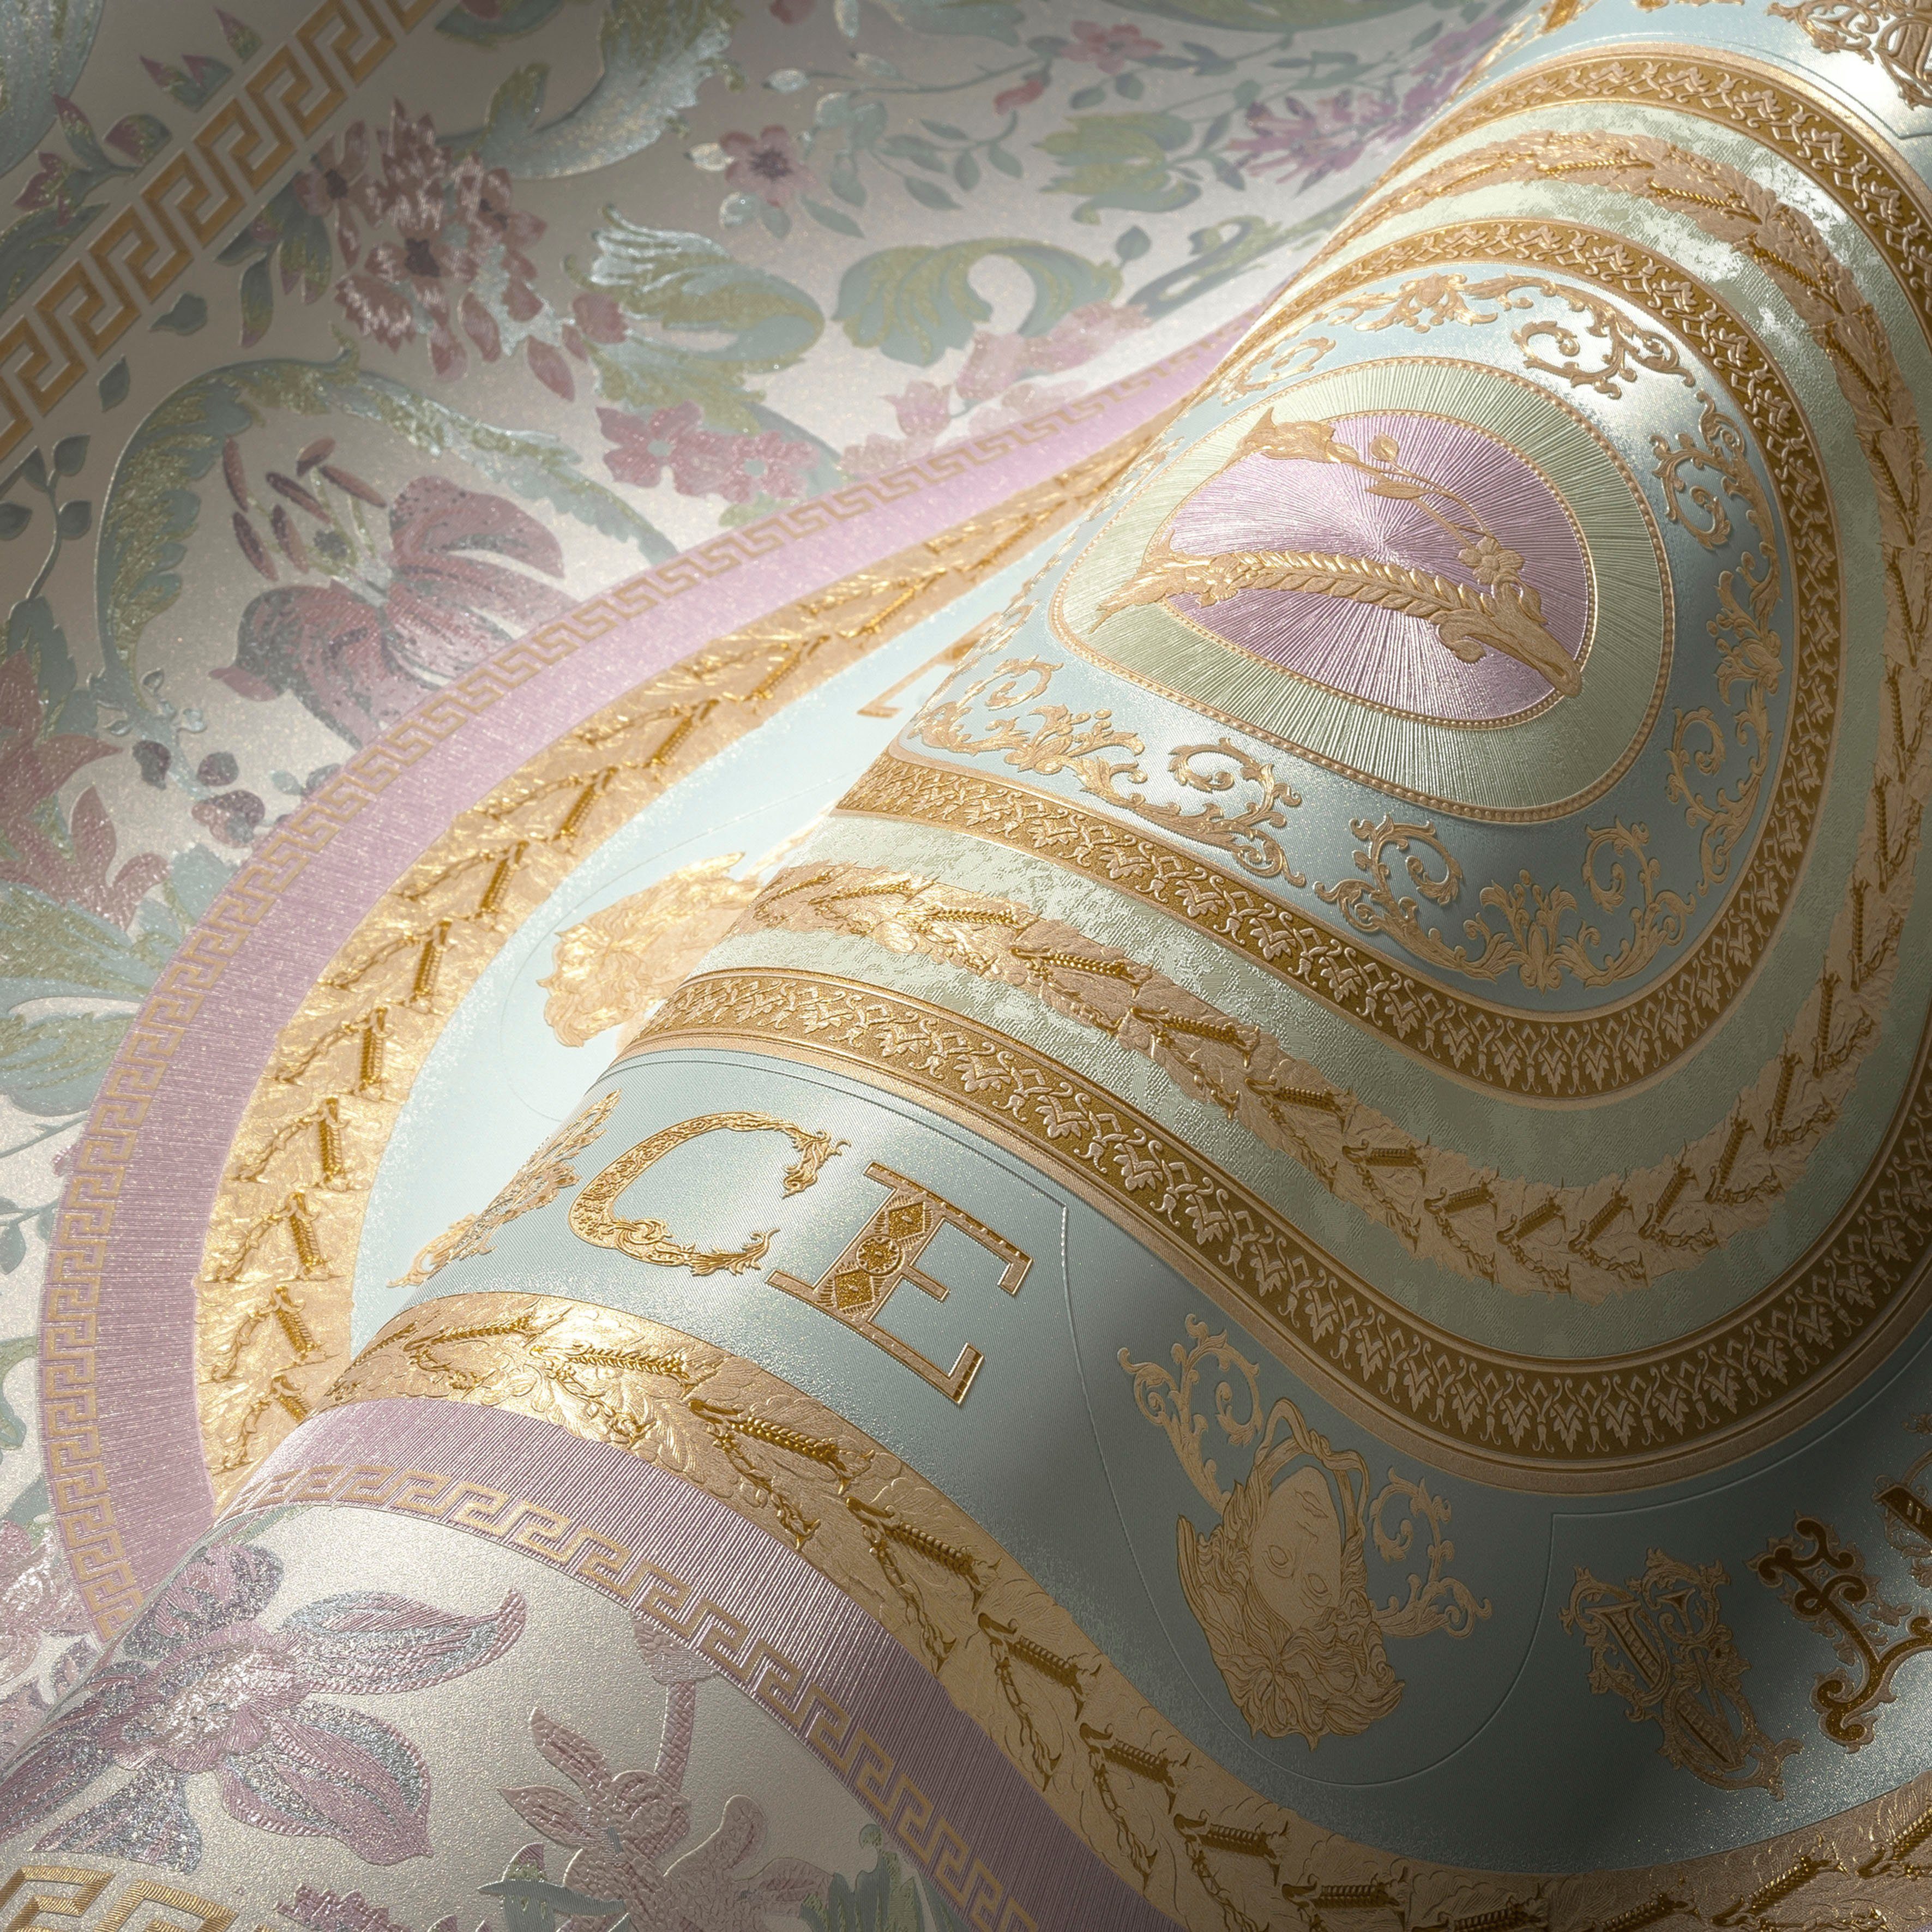 Fliesen-Tapete glänzend, leicht Versace (1 mint/goldfarben/rosa strukturiert, leicht Wallpaper Design, Versace St), Floral Designertapete, Vliestapete auffallende 5